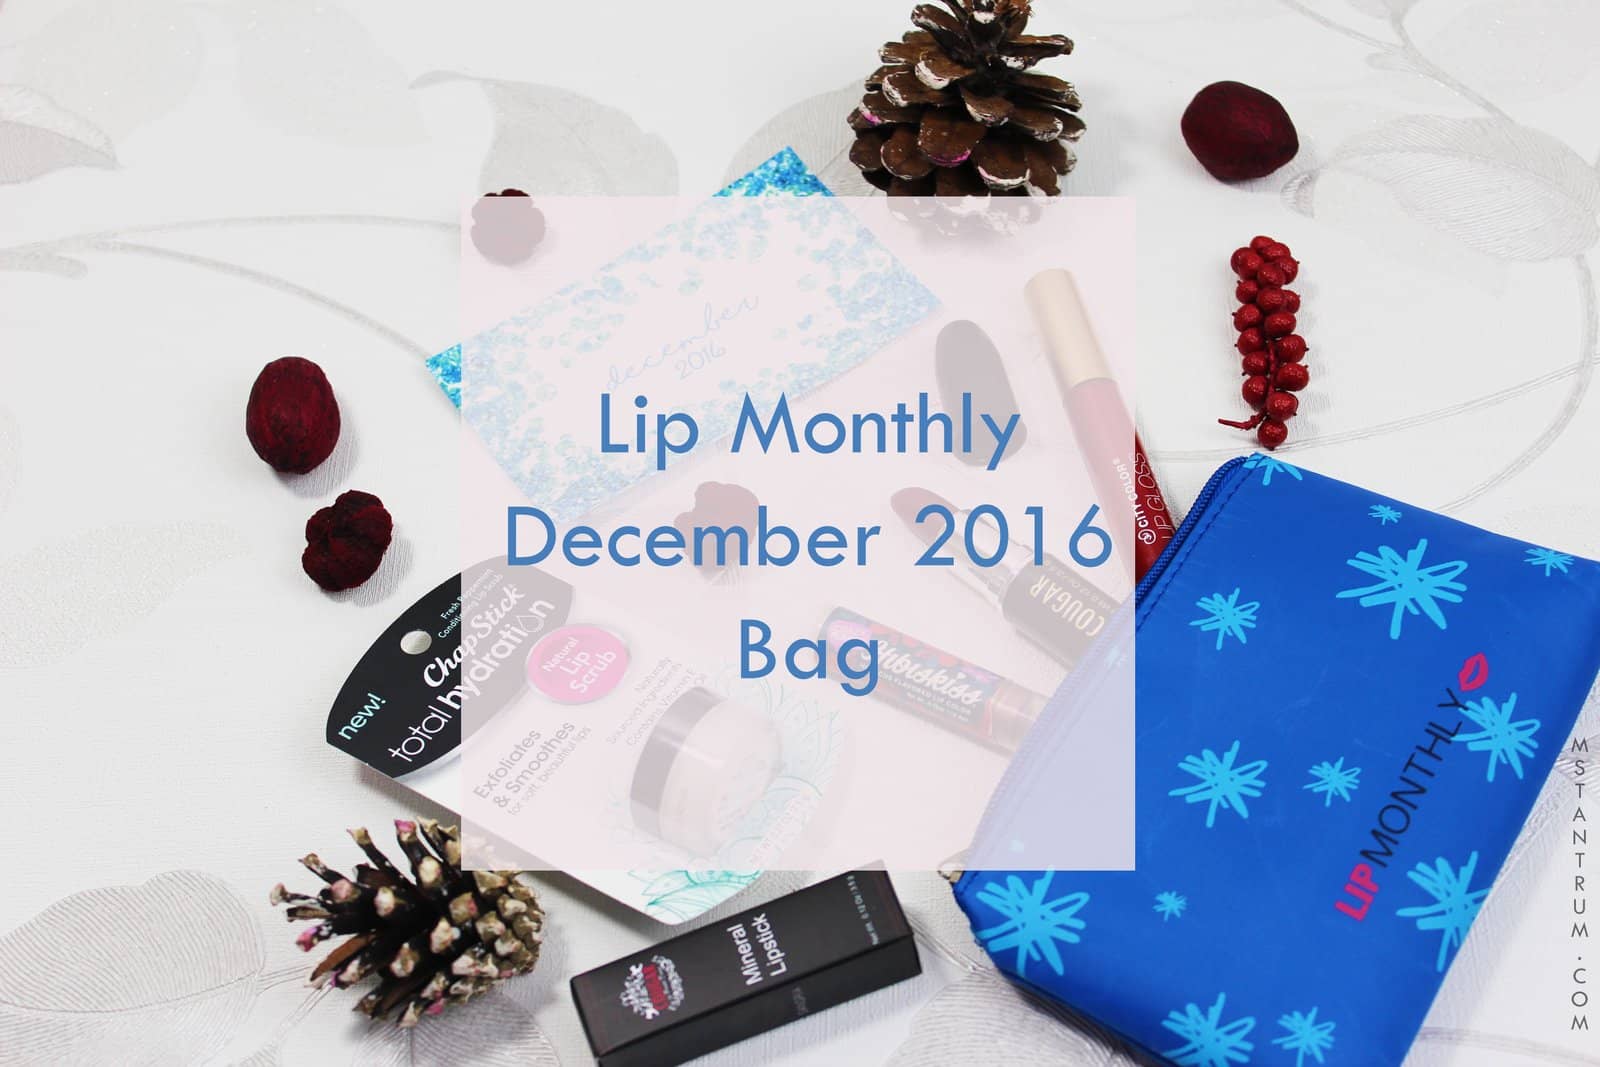 Lip Monthly December 2016.